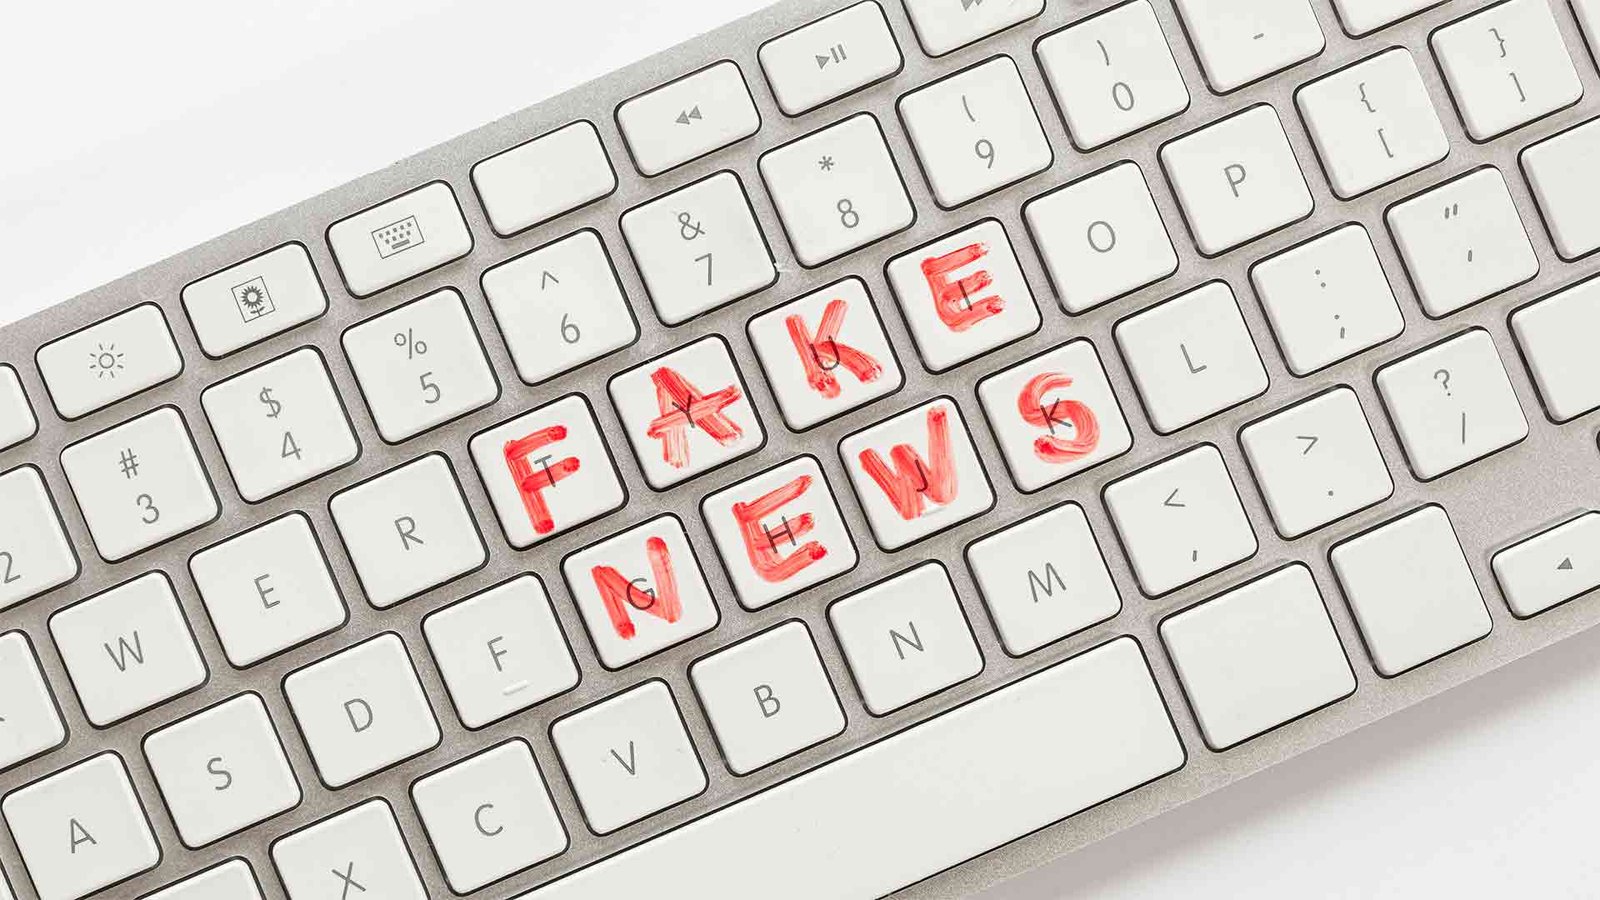 keyboard-with-fake-news